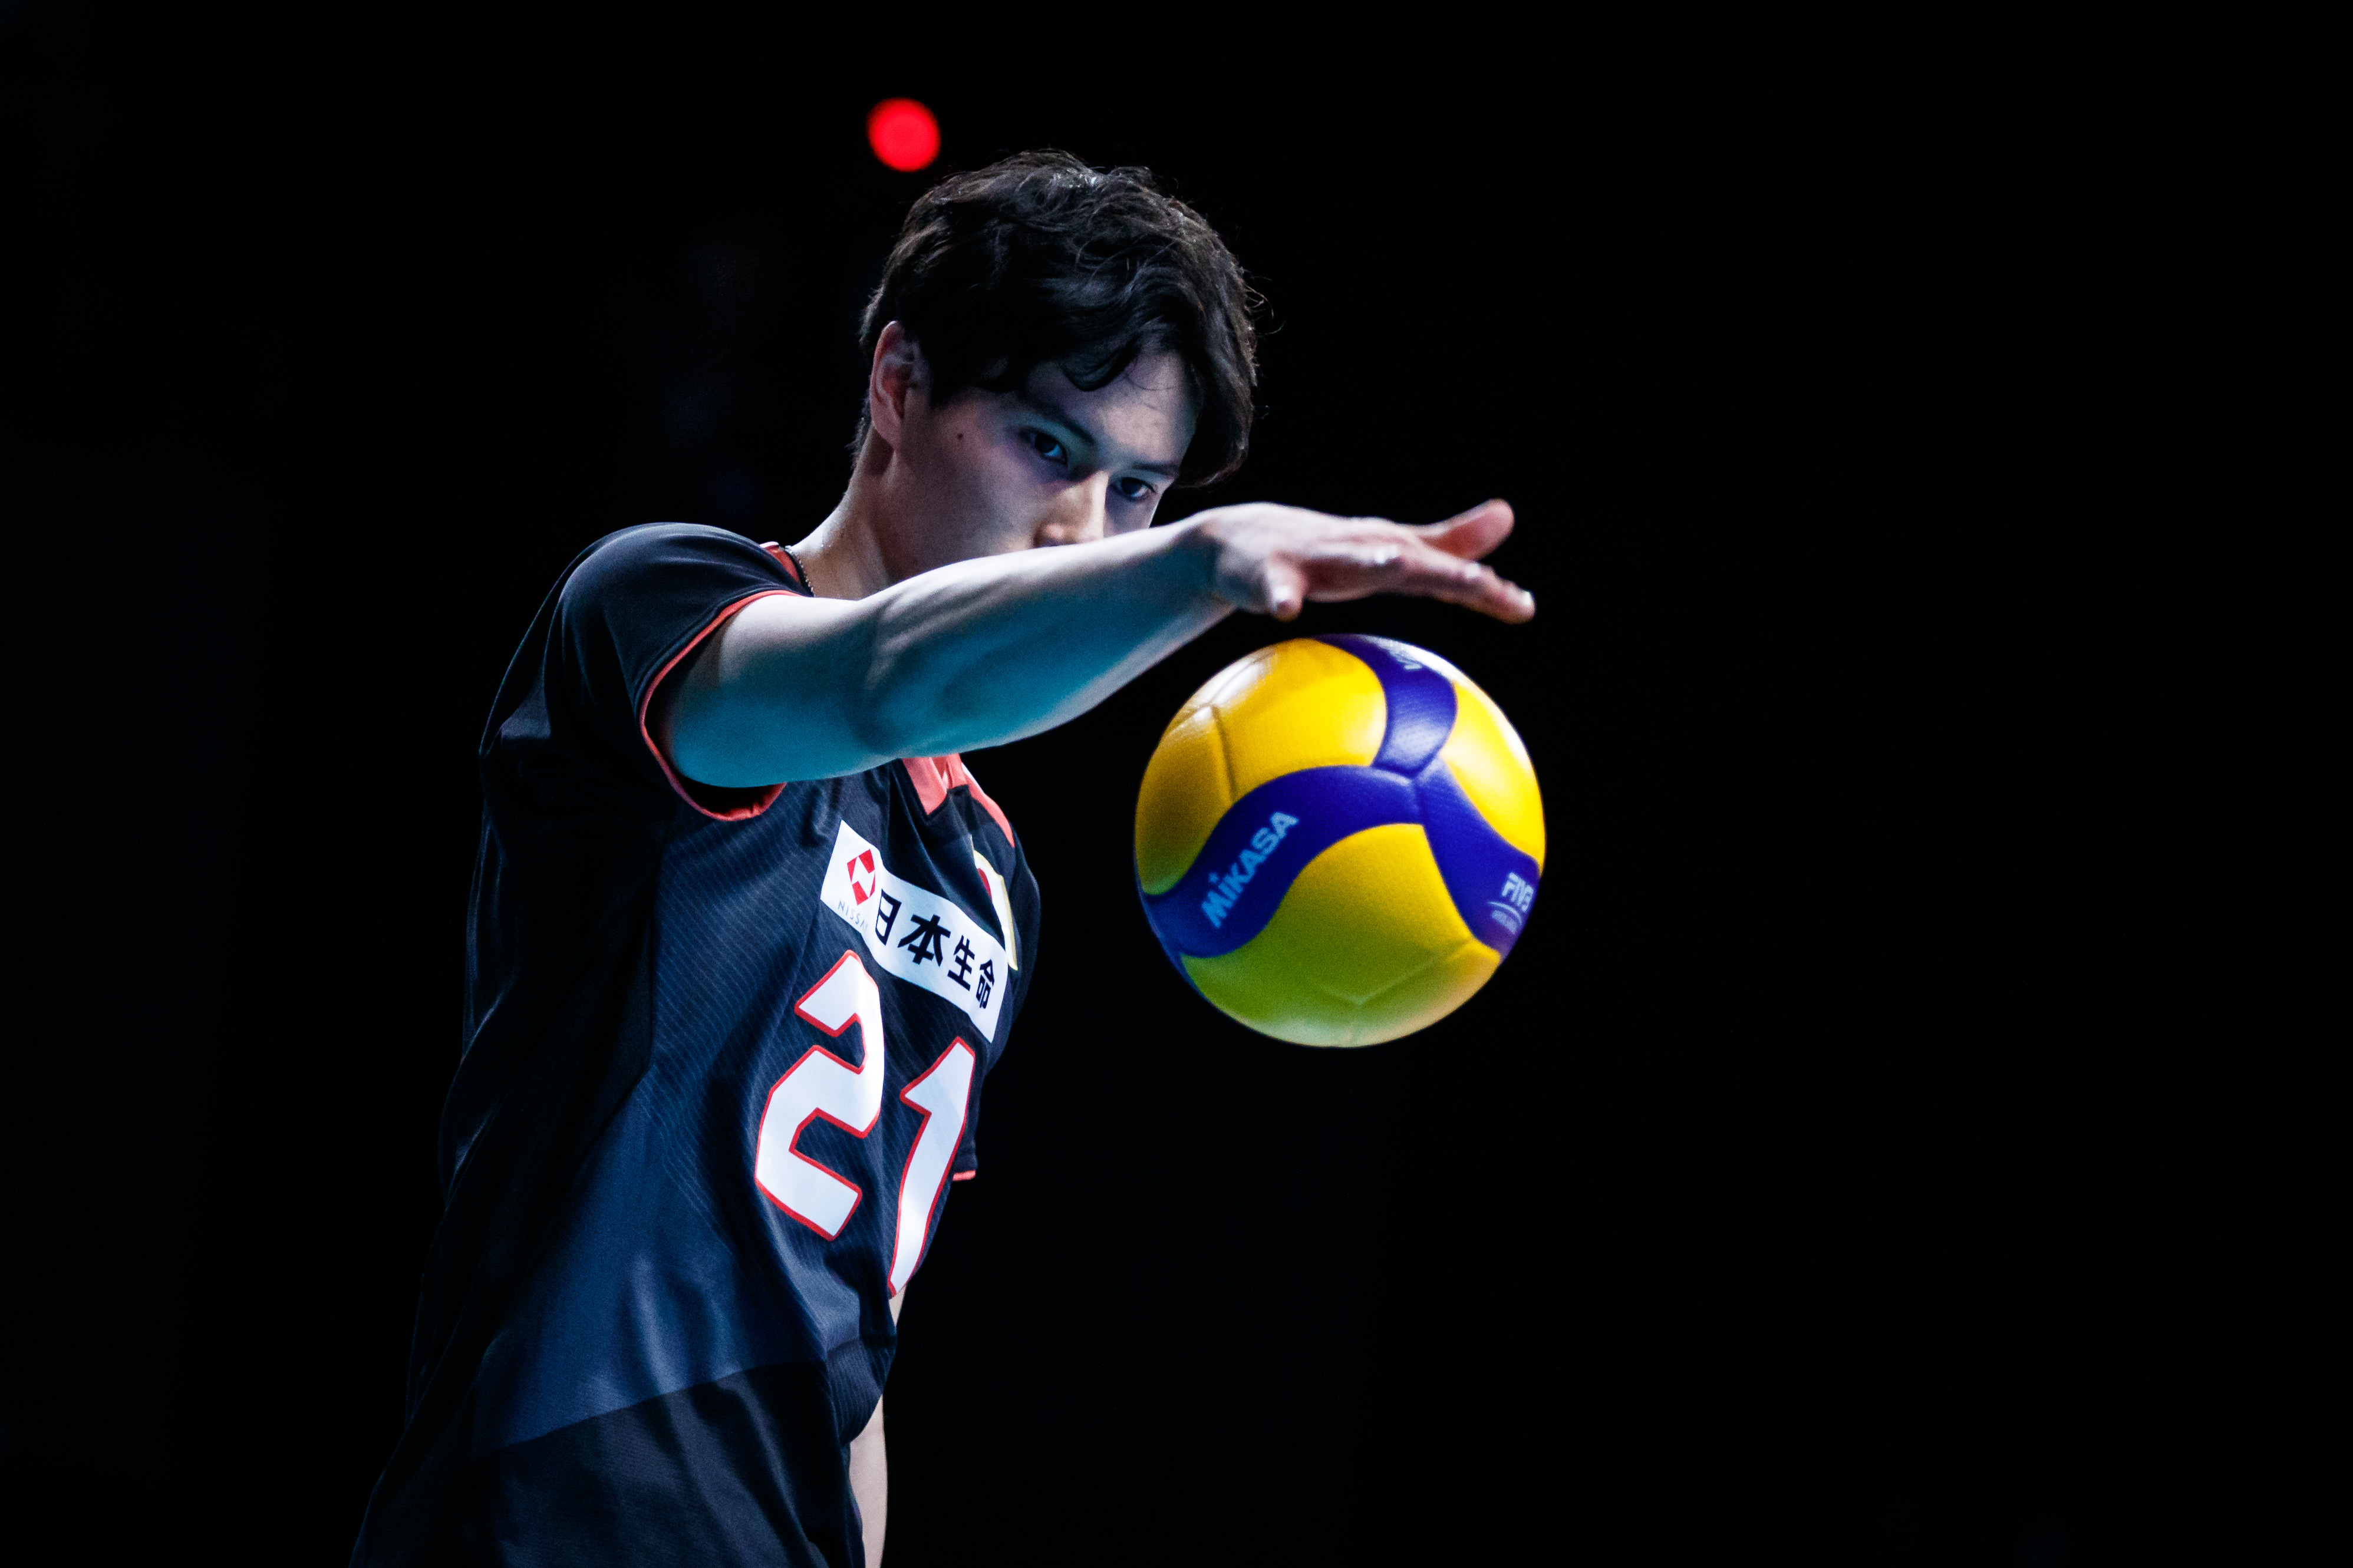 A new star is born: Ran Takahashi | volleyballworld.com